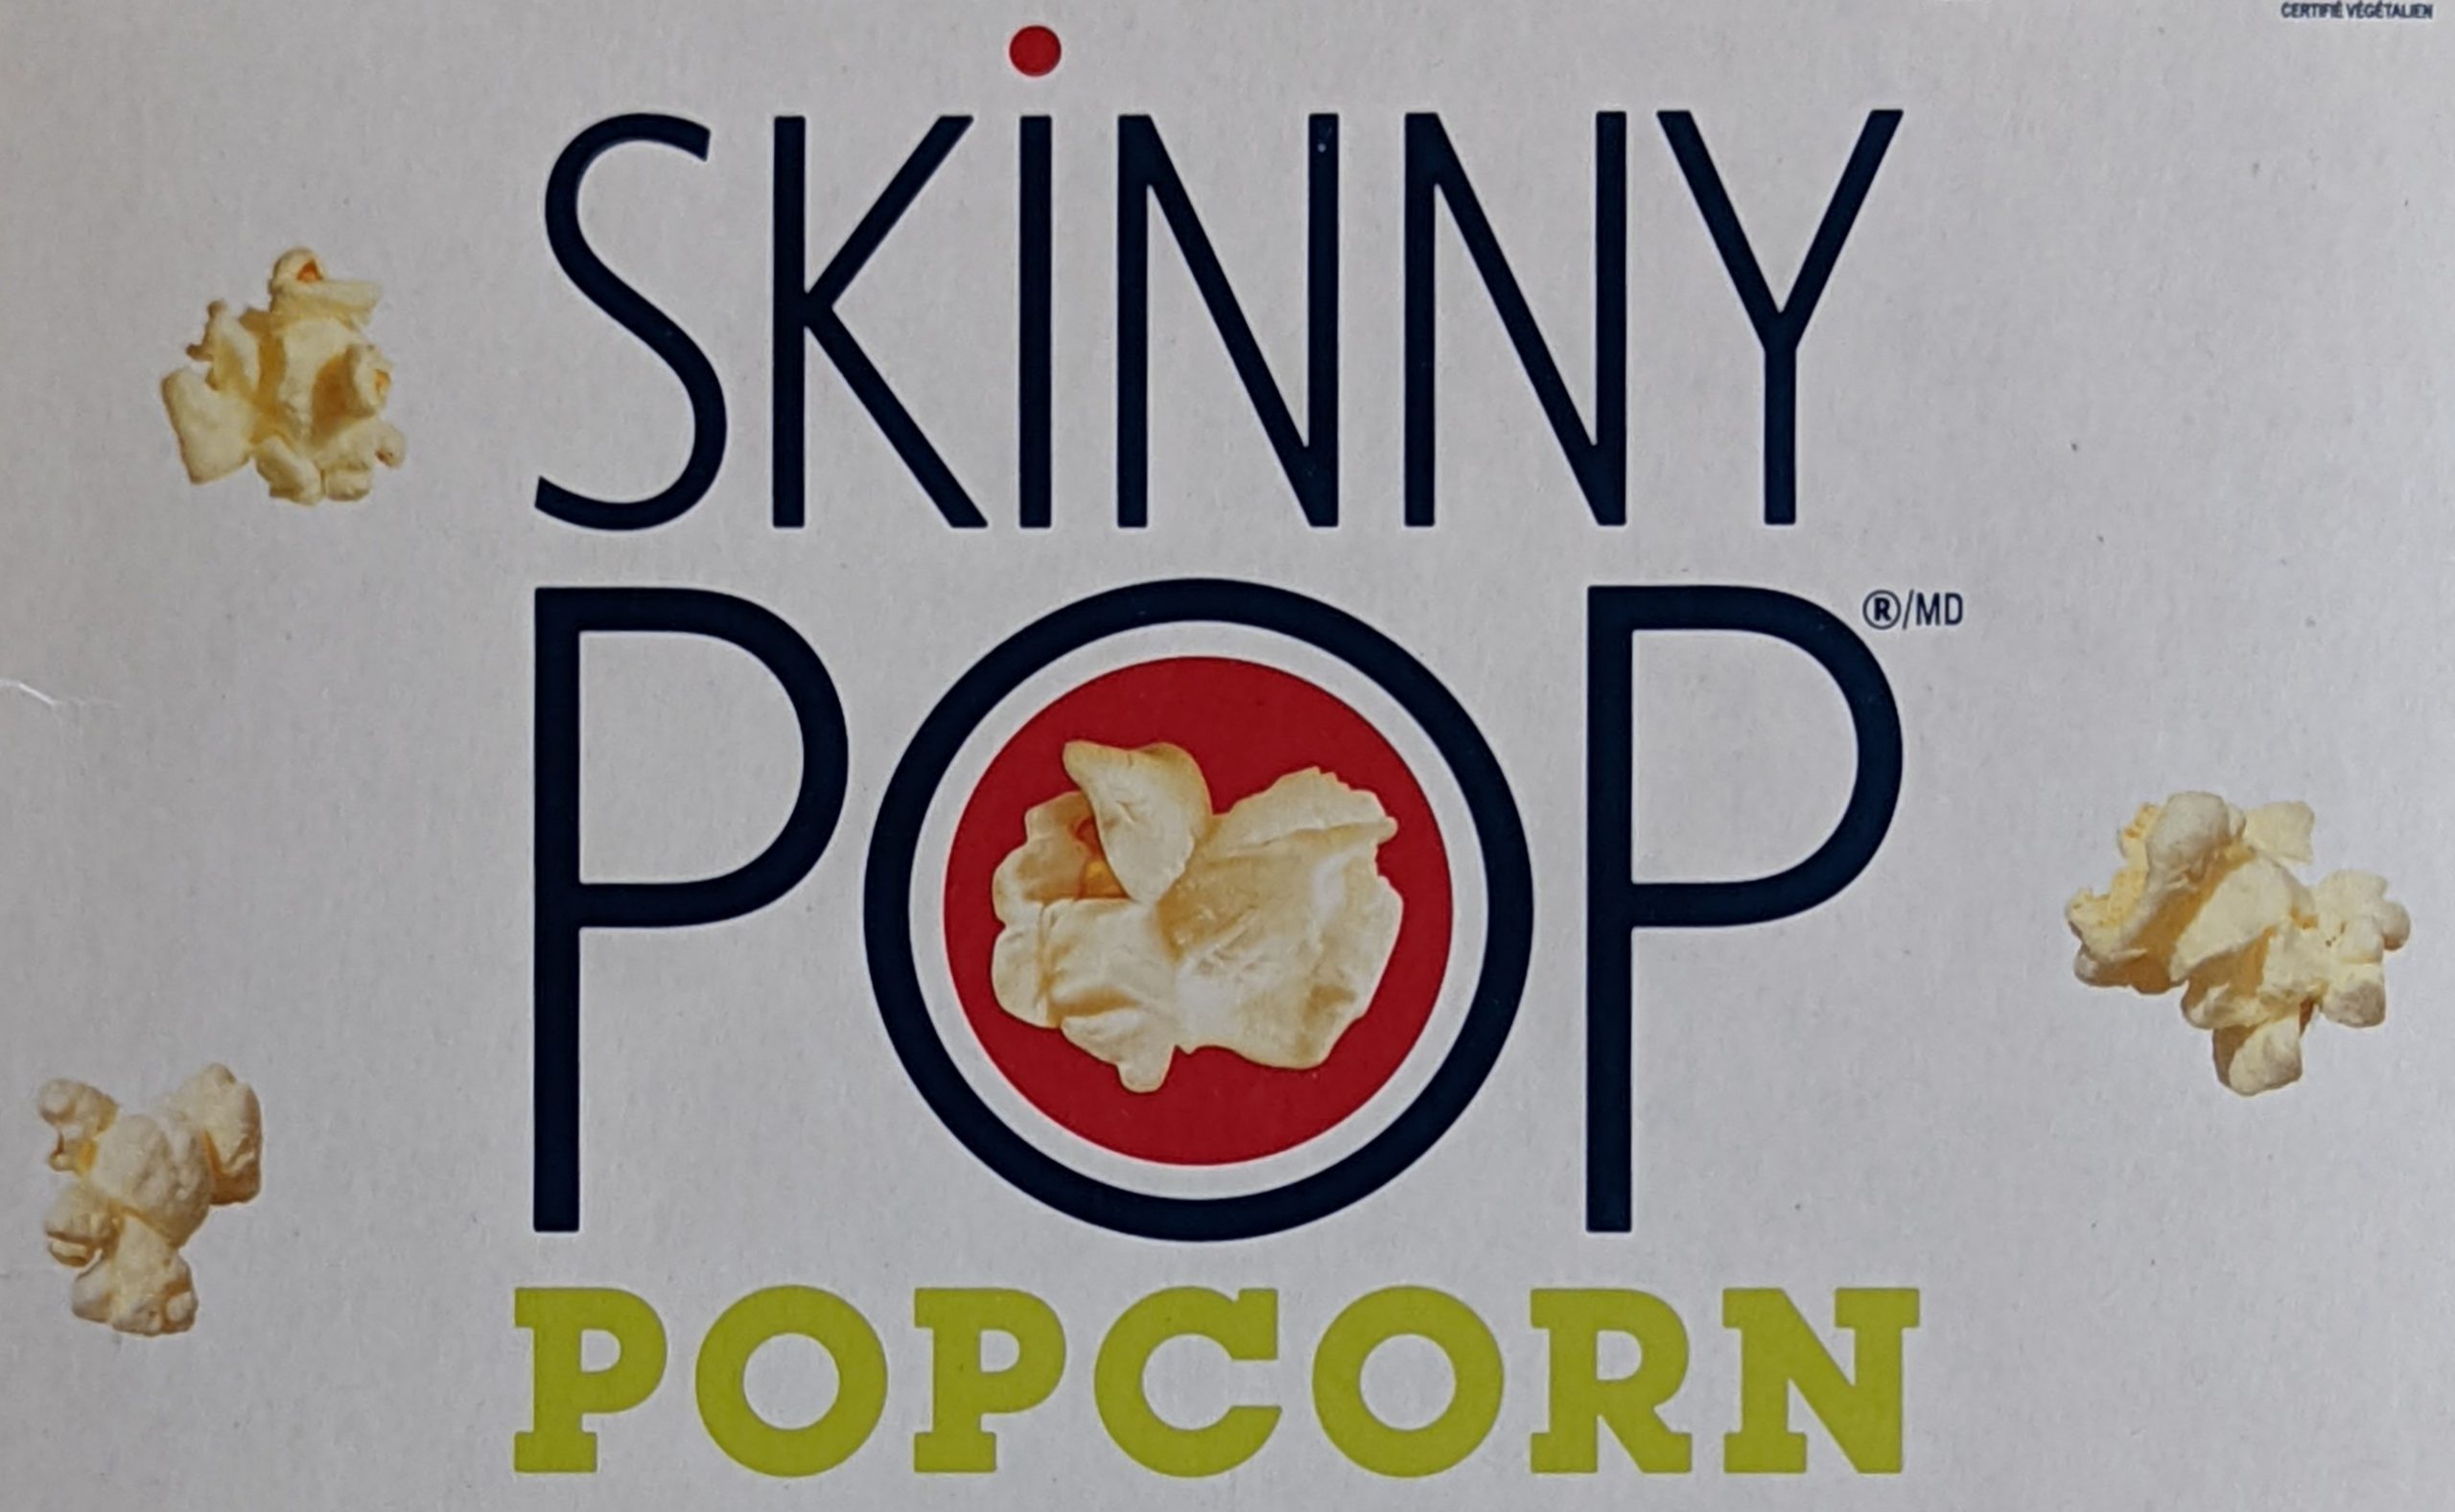 Skinny Pop Butter Flavour Microwave Popcorn